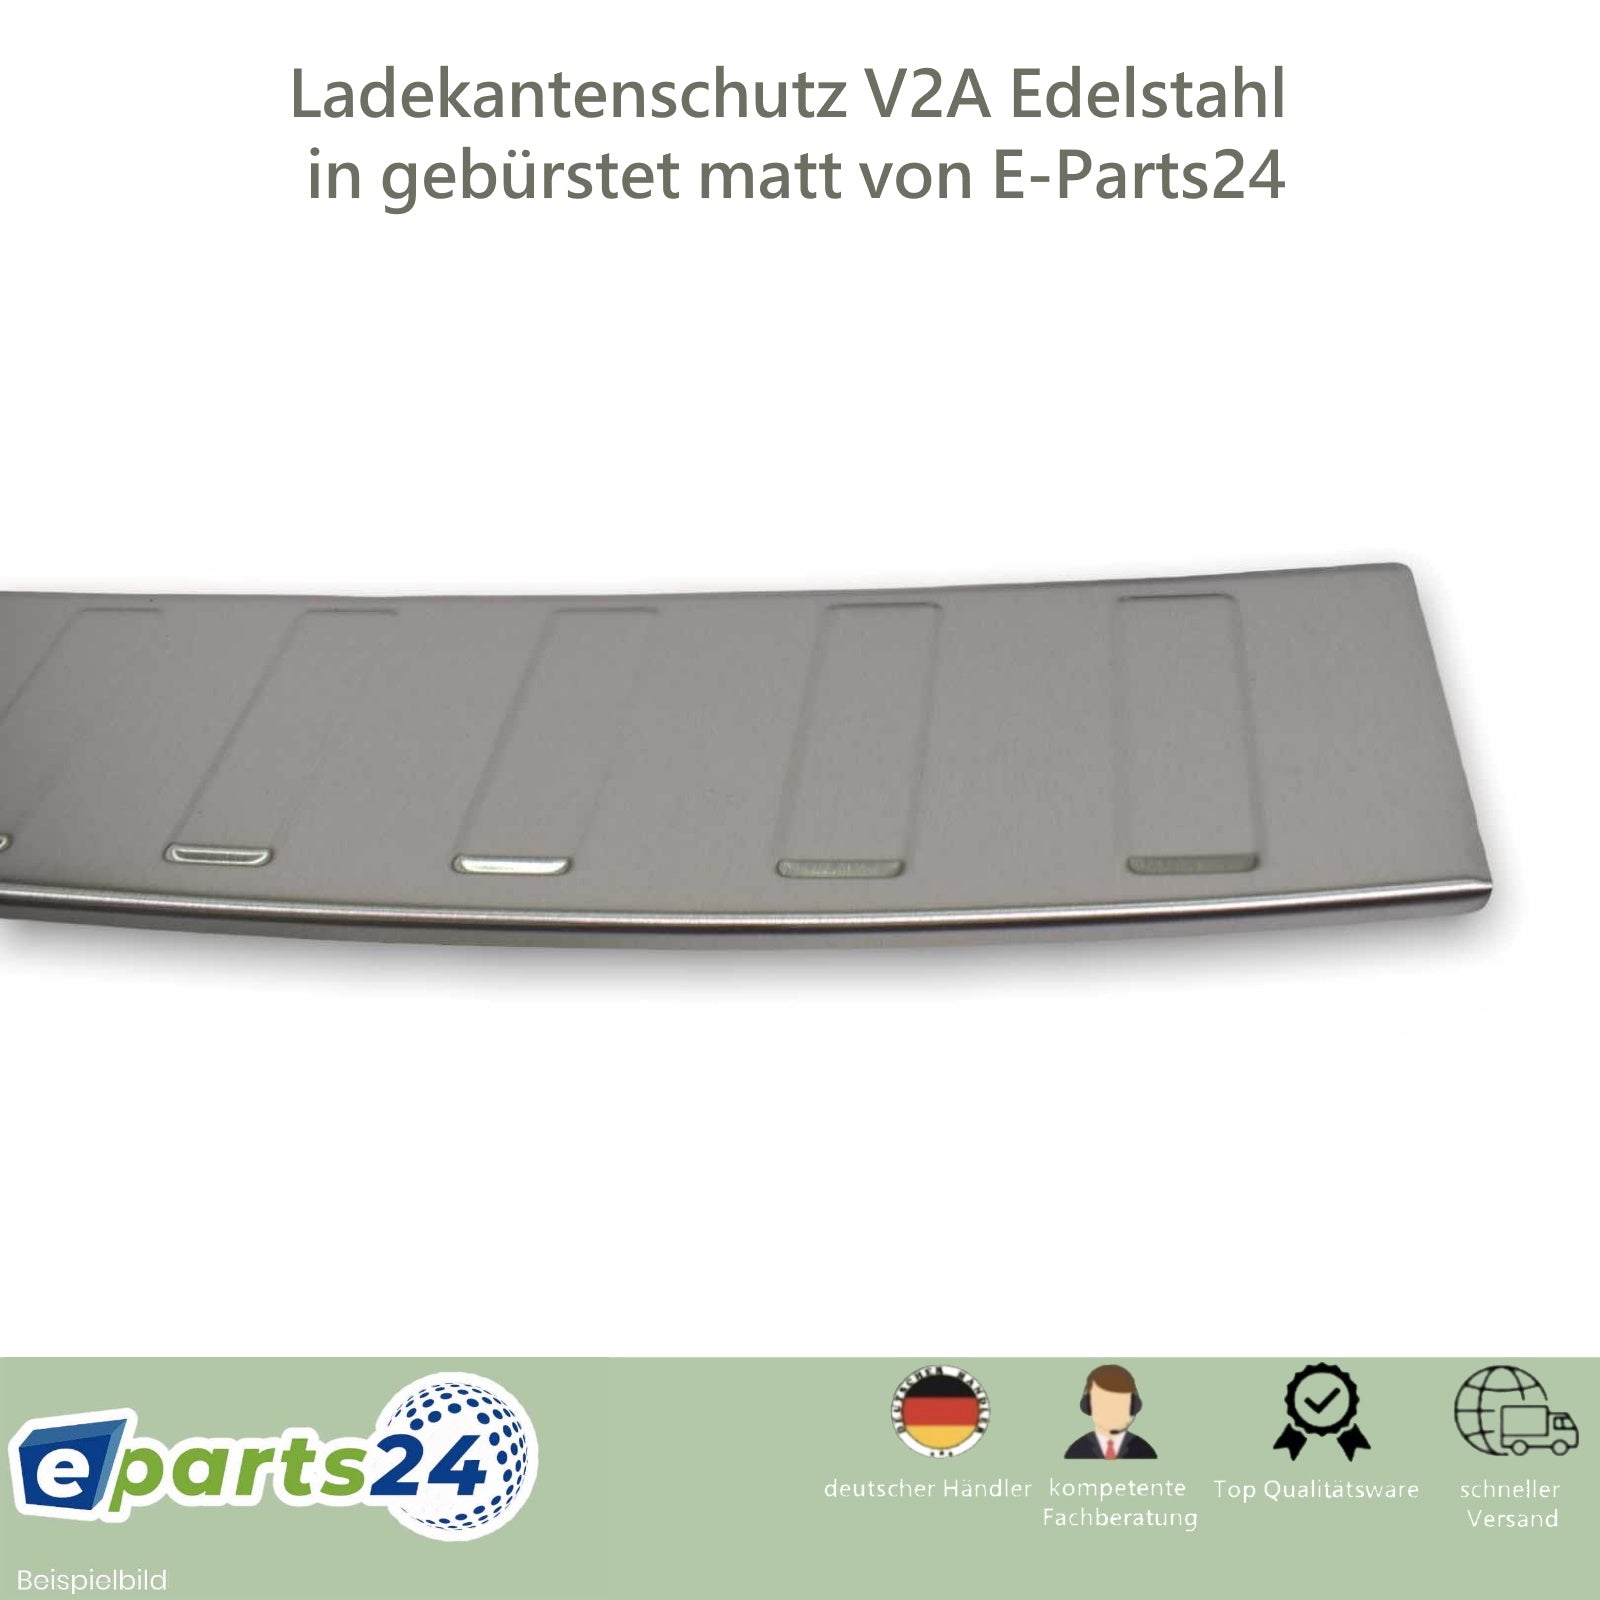 Ladekantenschutz Heckschutz für g 2010-2015 1T3 Touran E-Parts24 VW – Edelstahl Bj